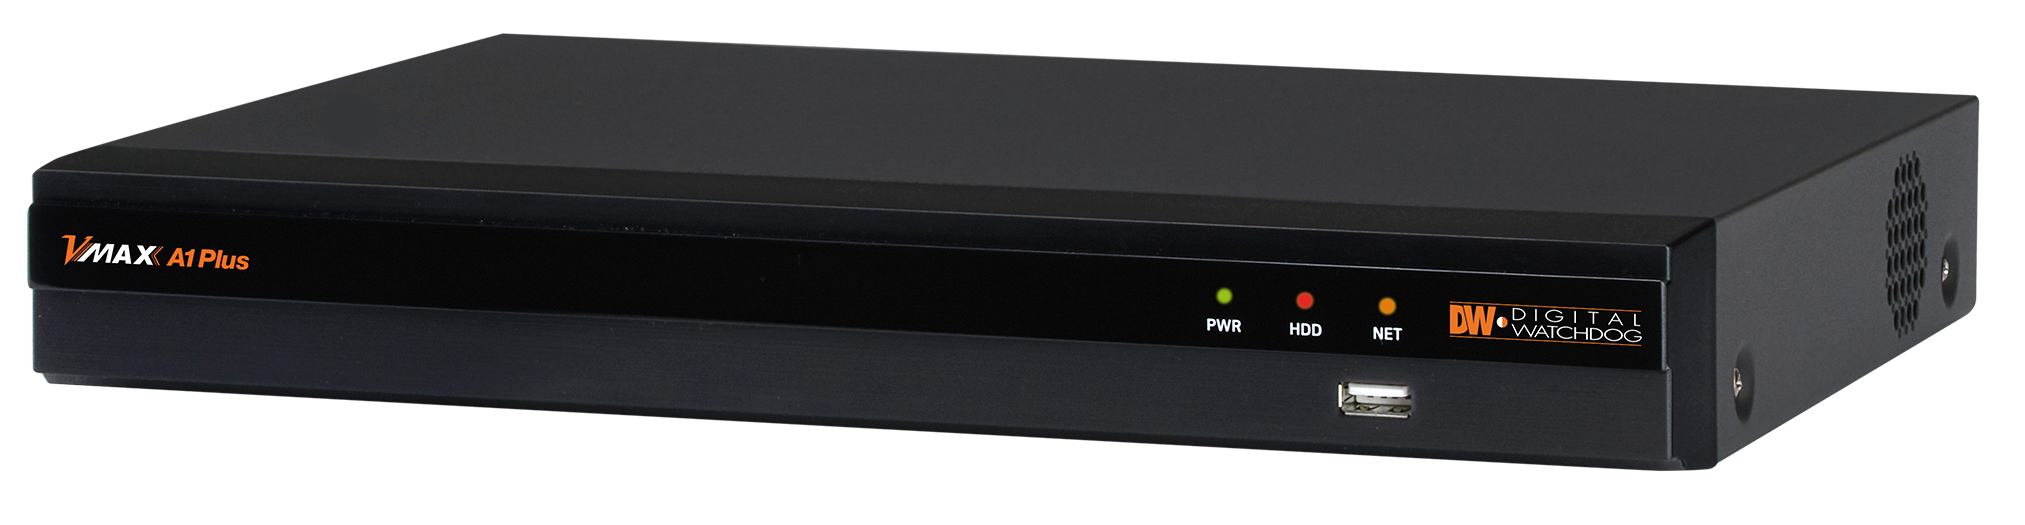 Digital Watchdog DW-VA1P412T  UHDoC - DVR 4ch 4 Channel Universal HD Over Coax DVR